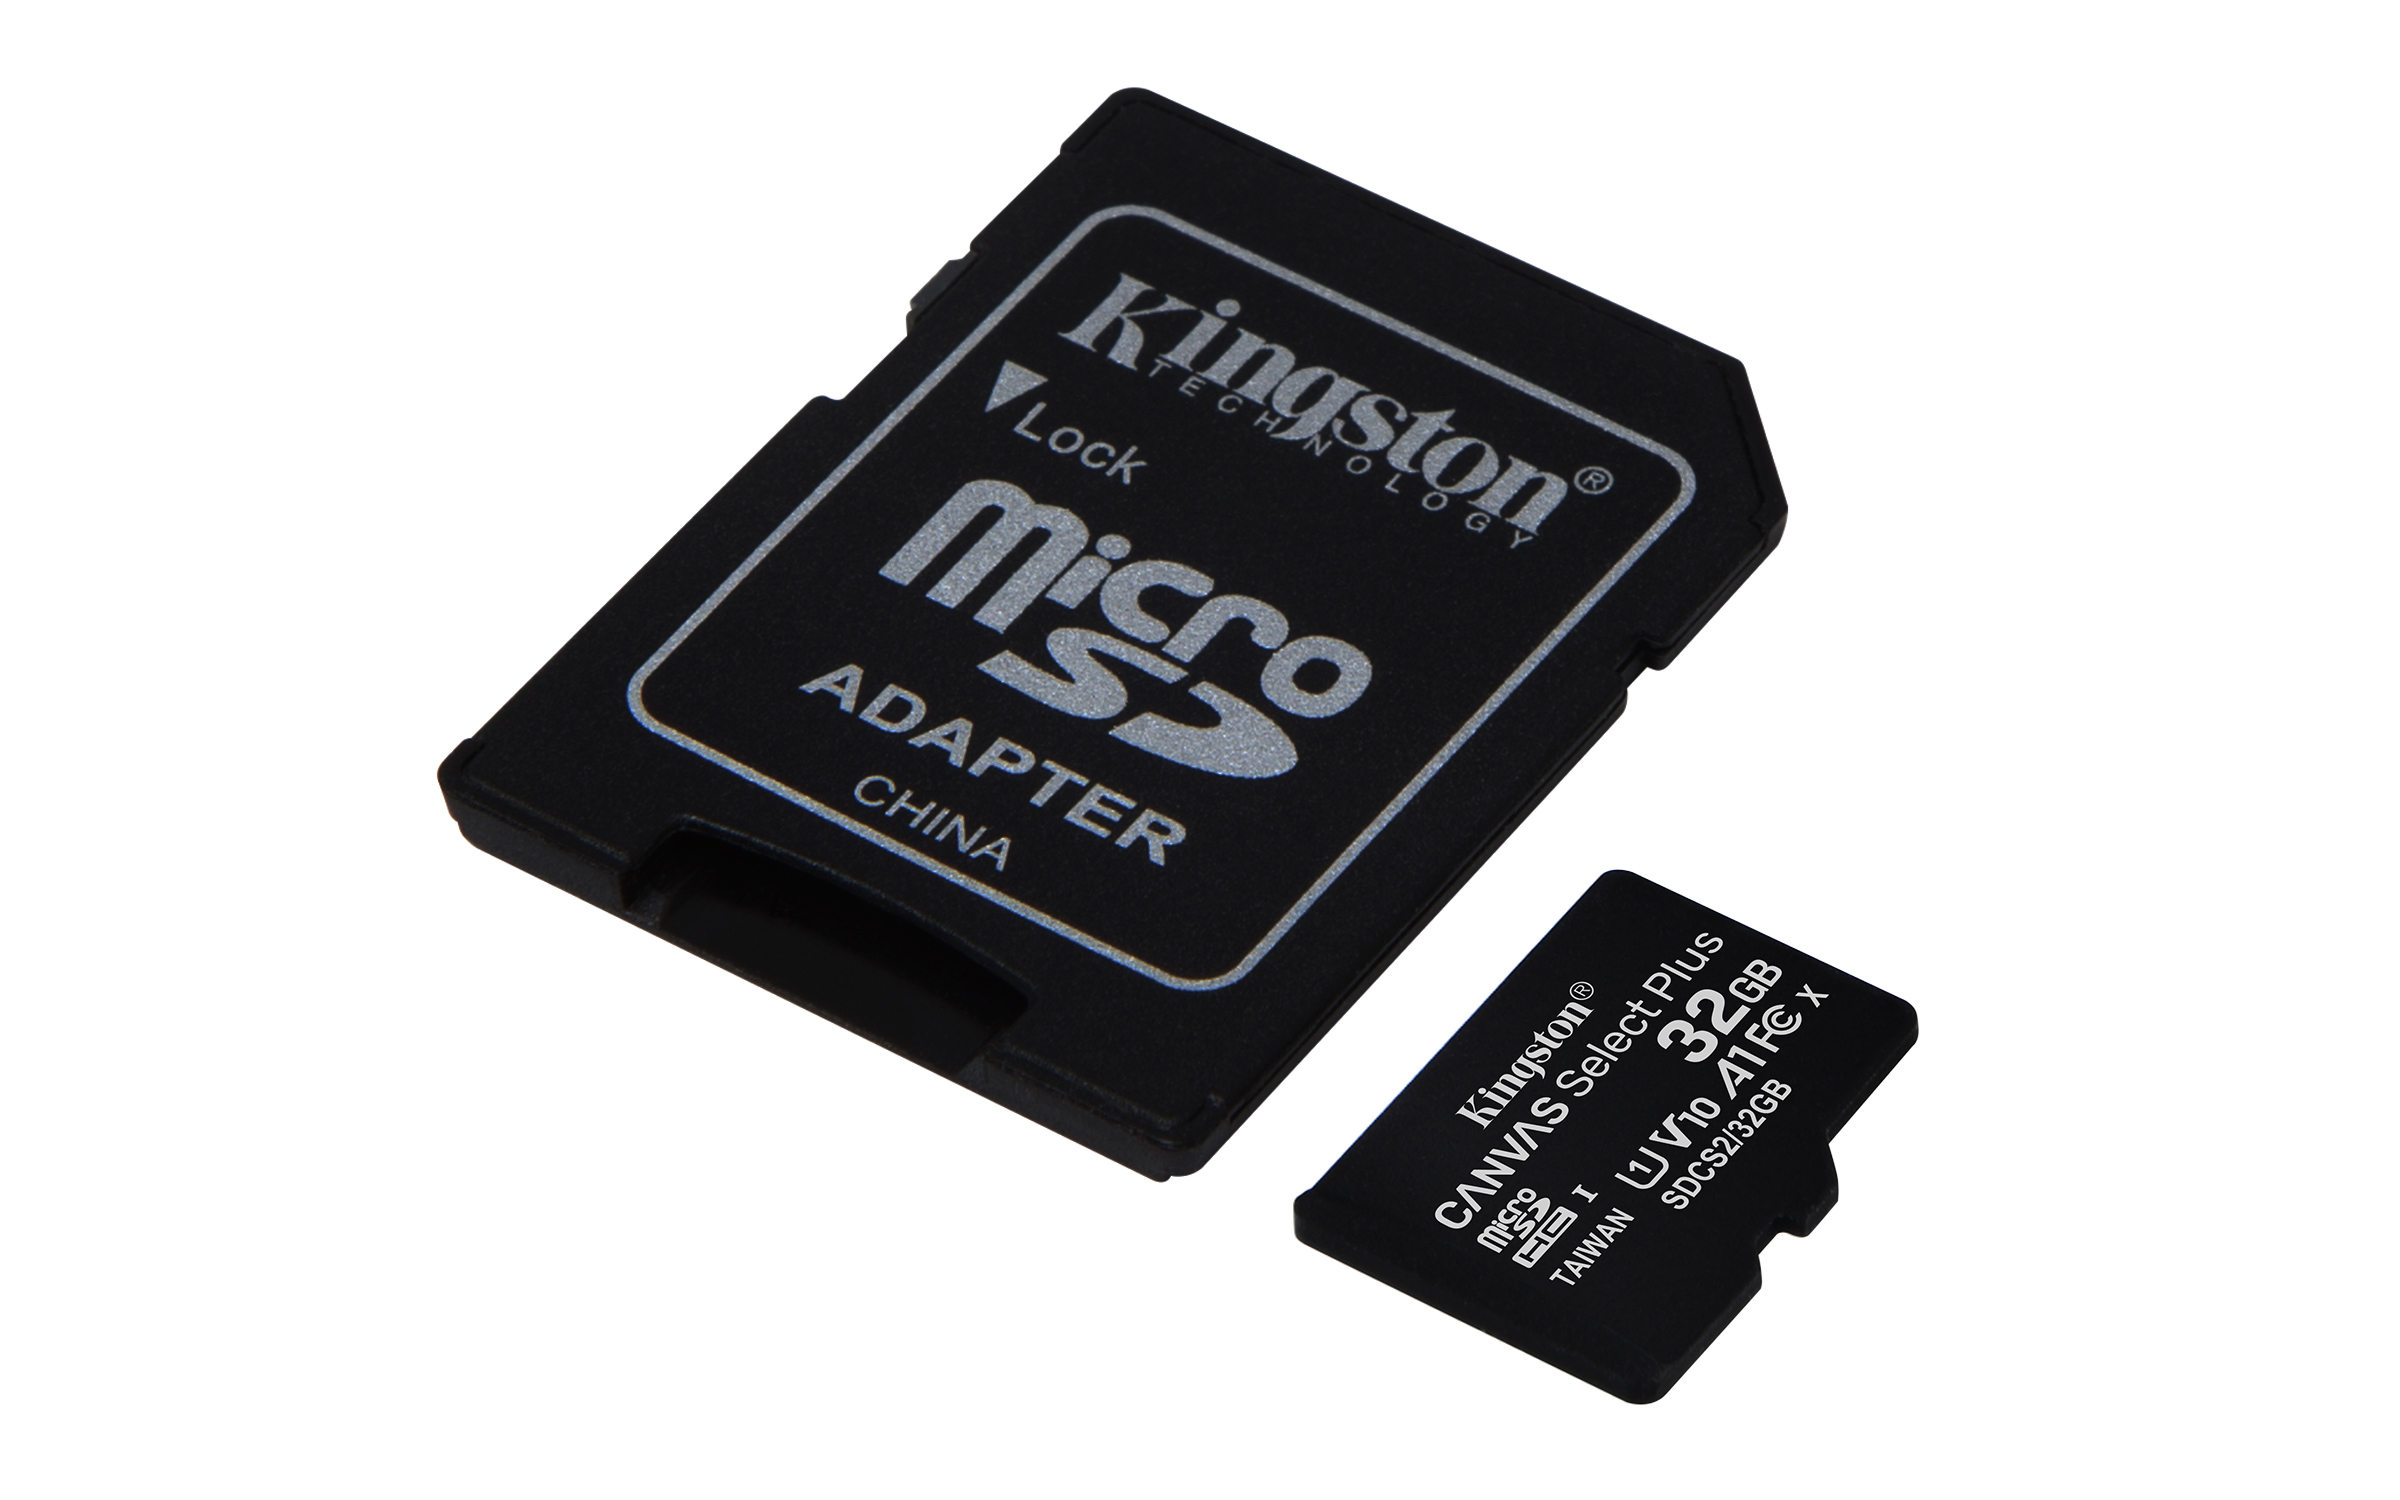 Kingston 32GB micSDHC 100R A1 C10 Card+ADP